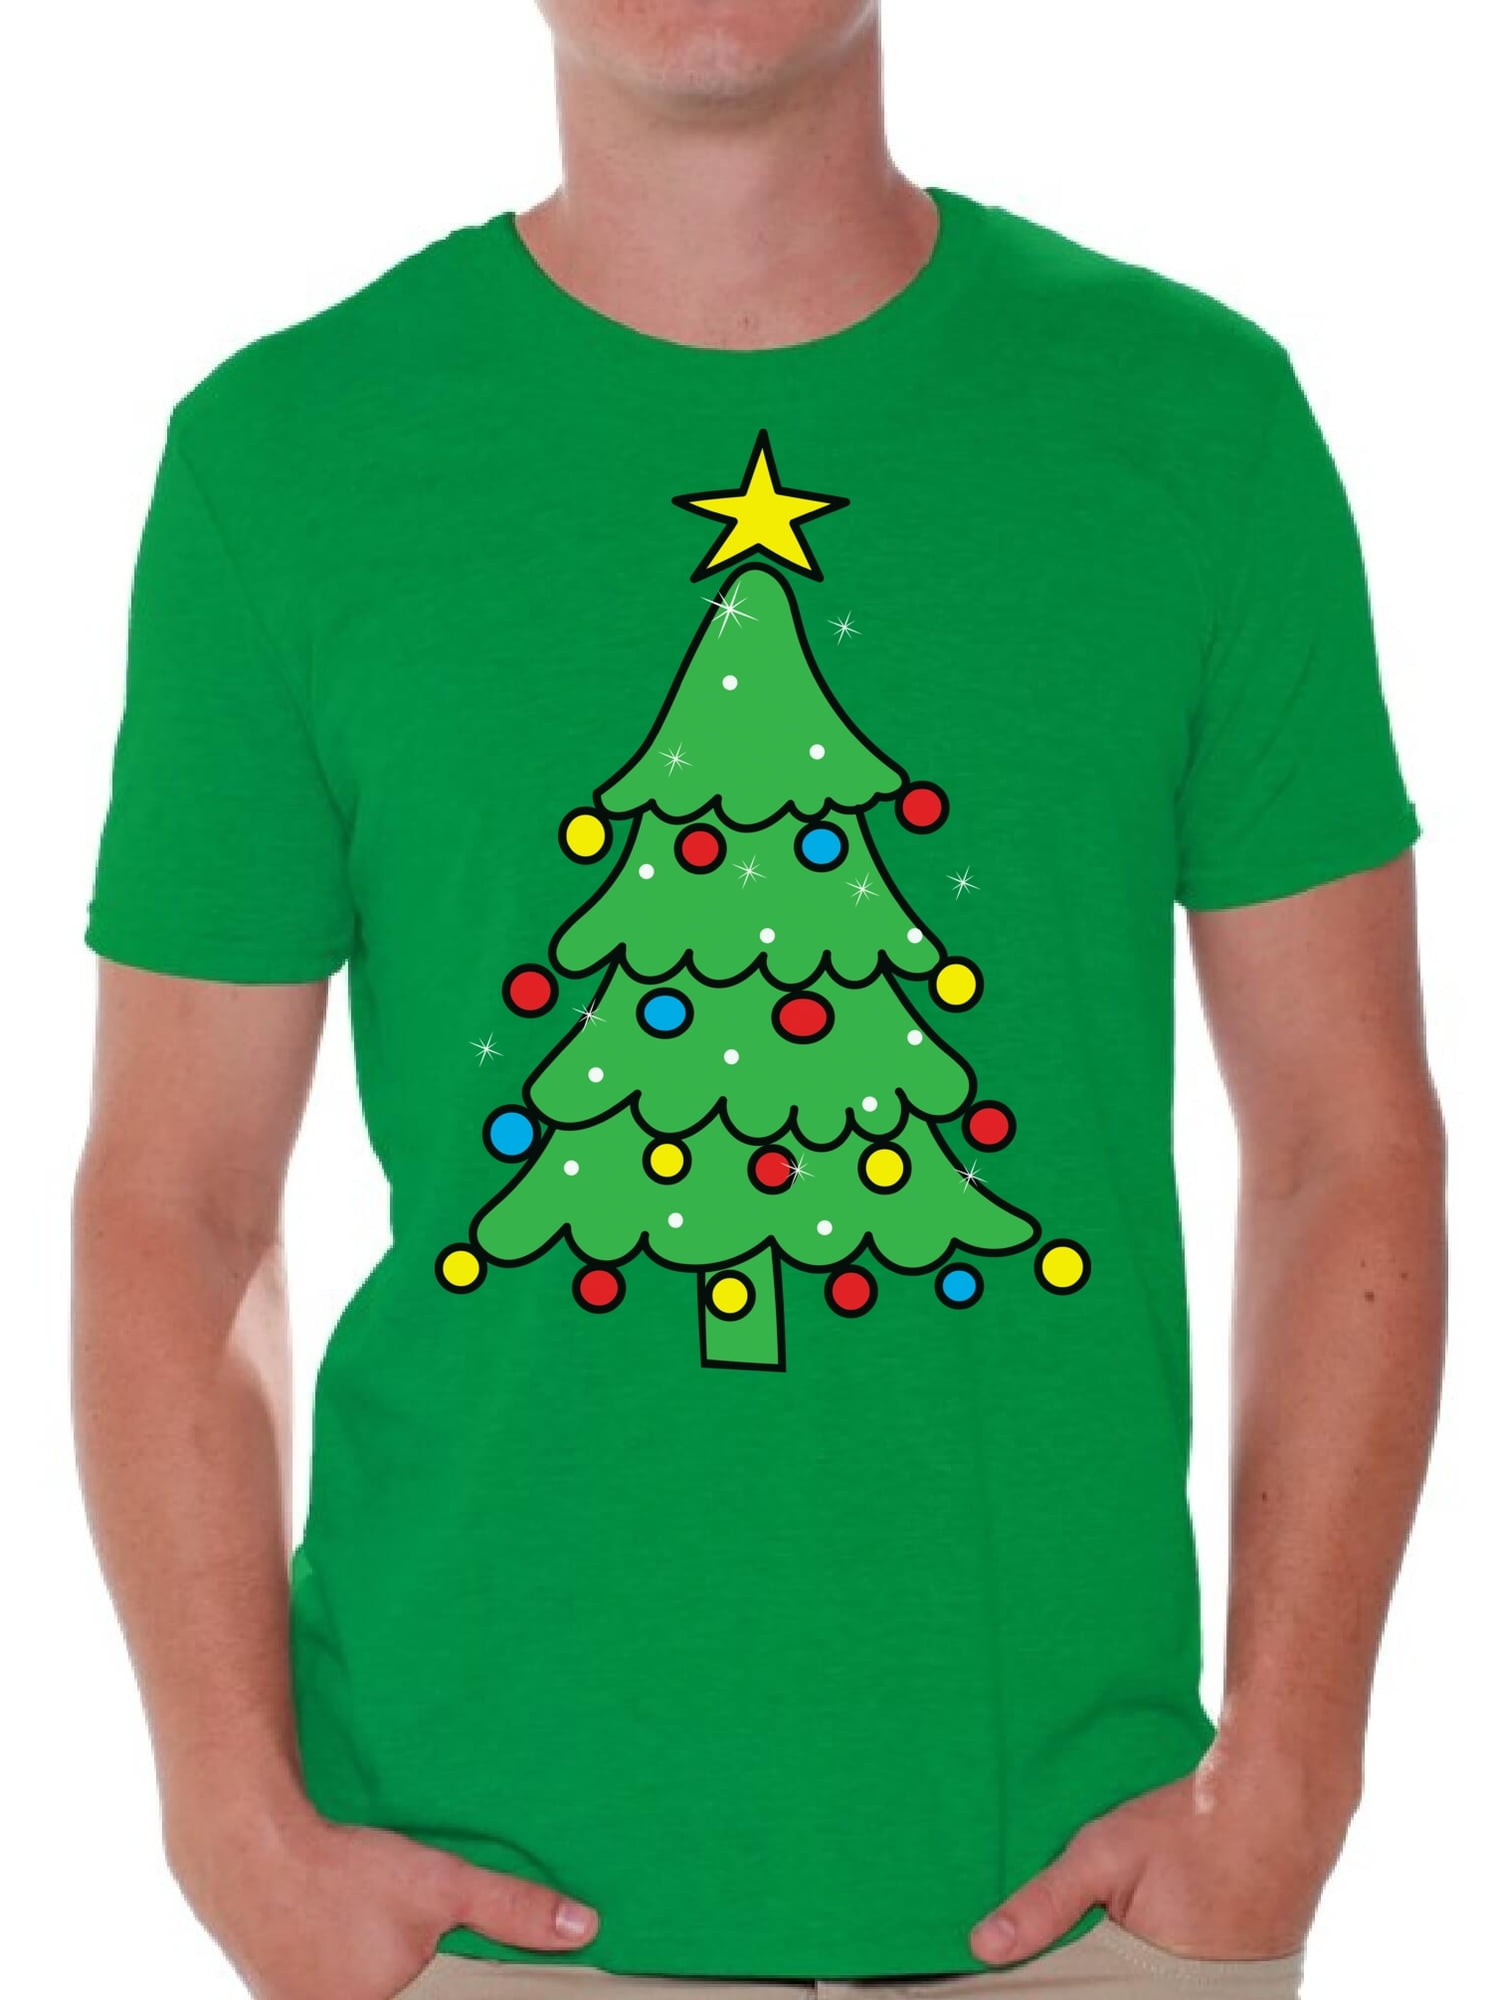 Christmas Graphic T-Shirts